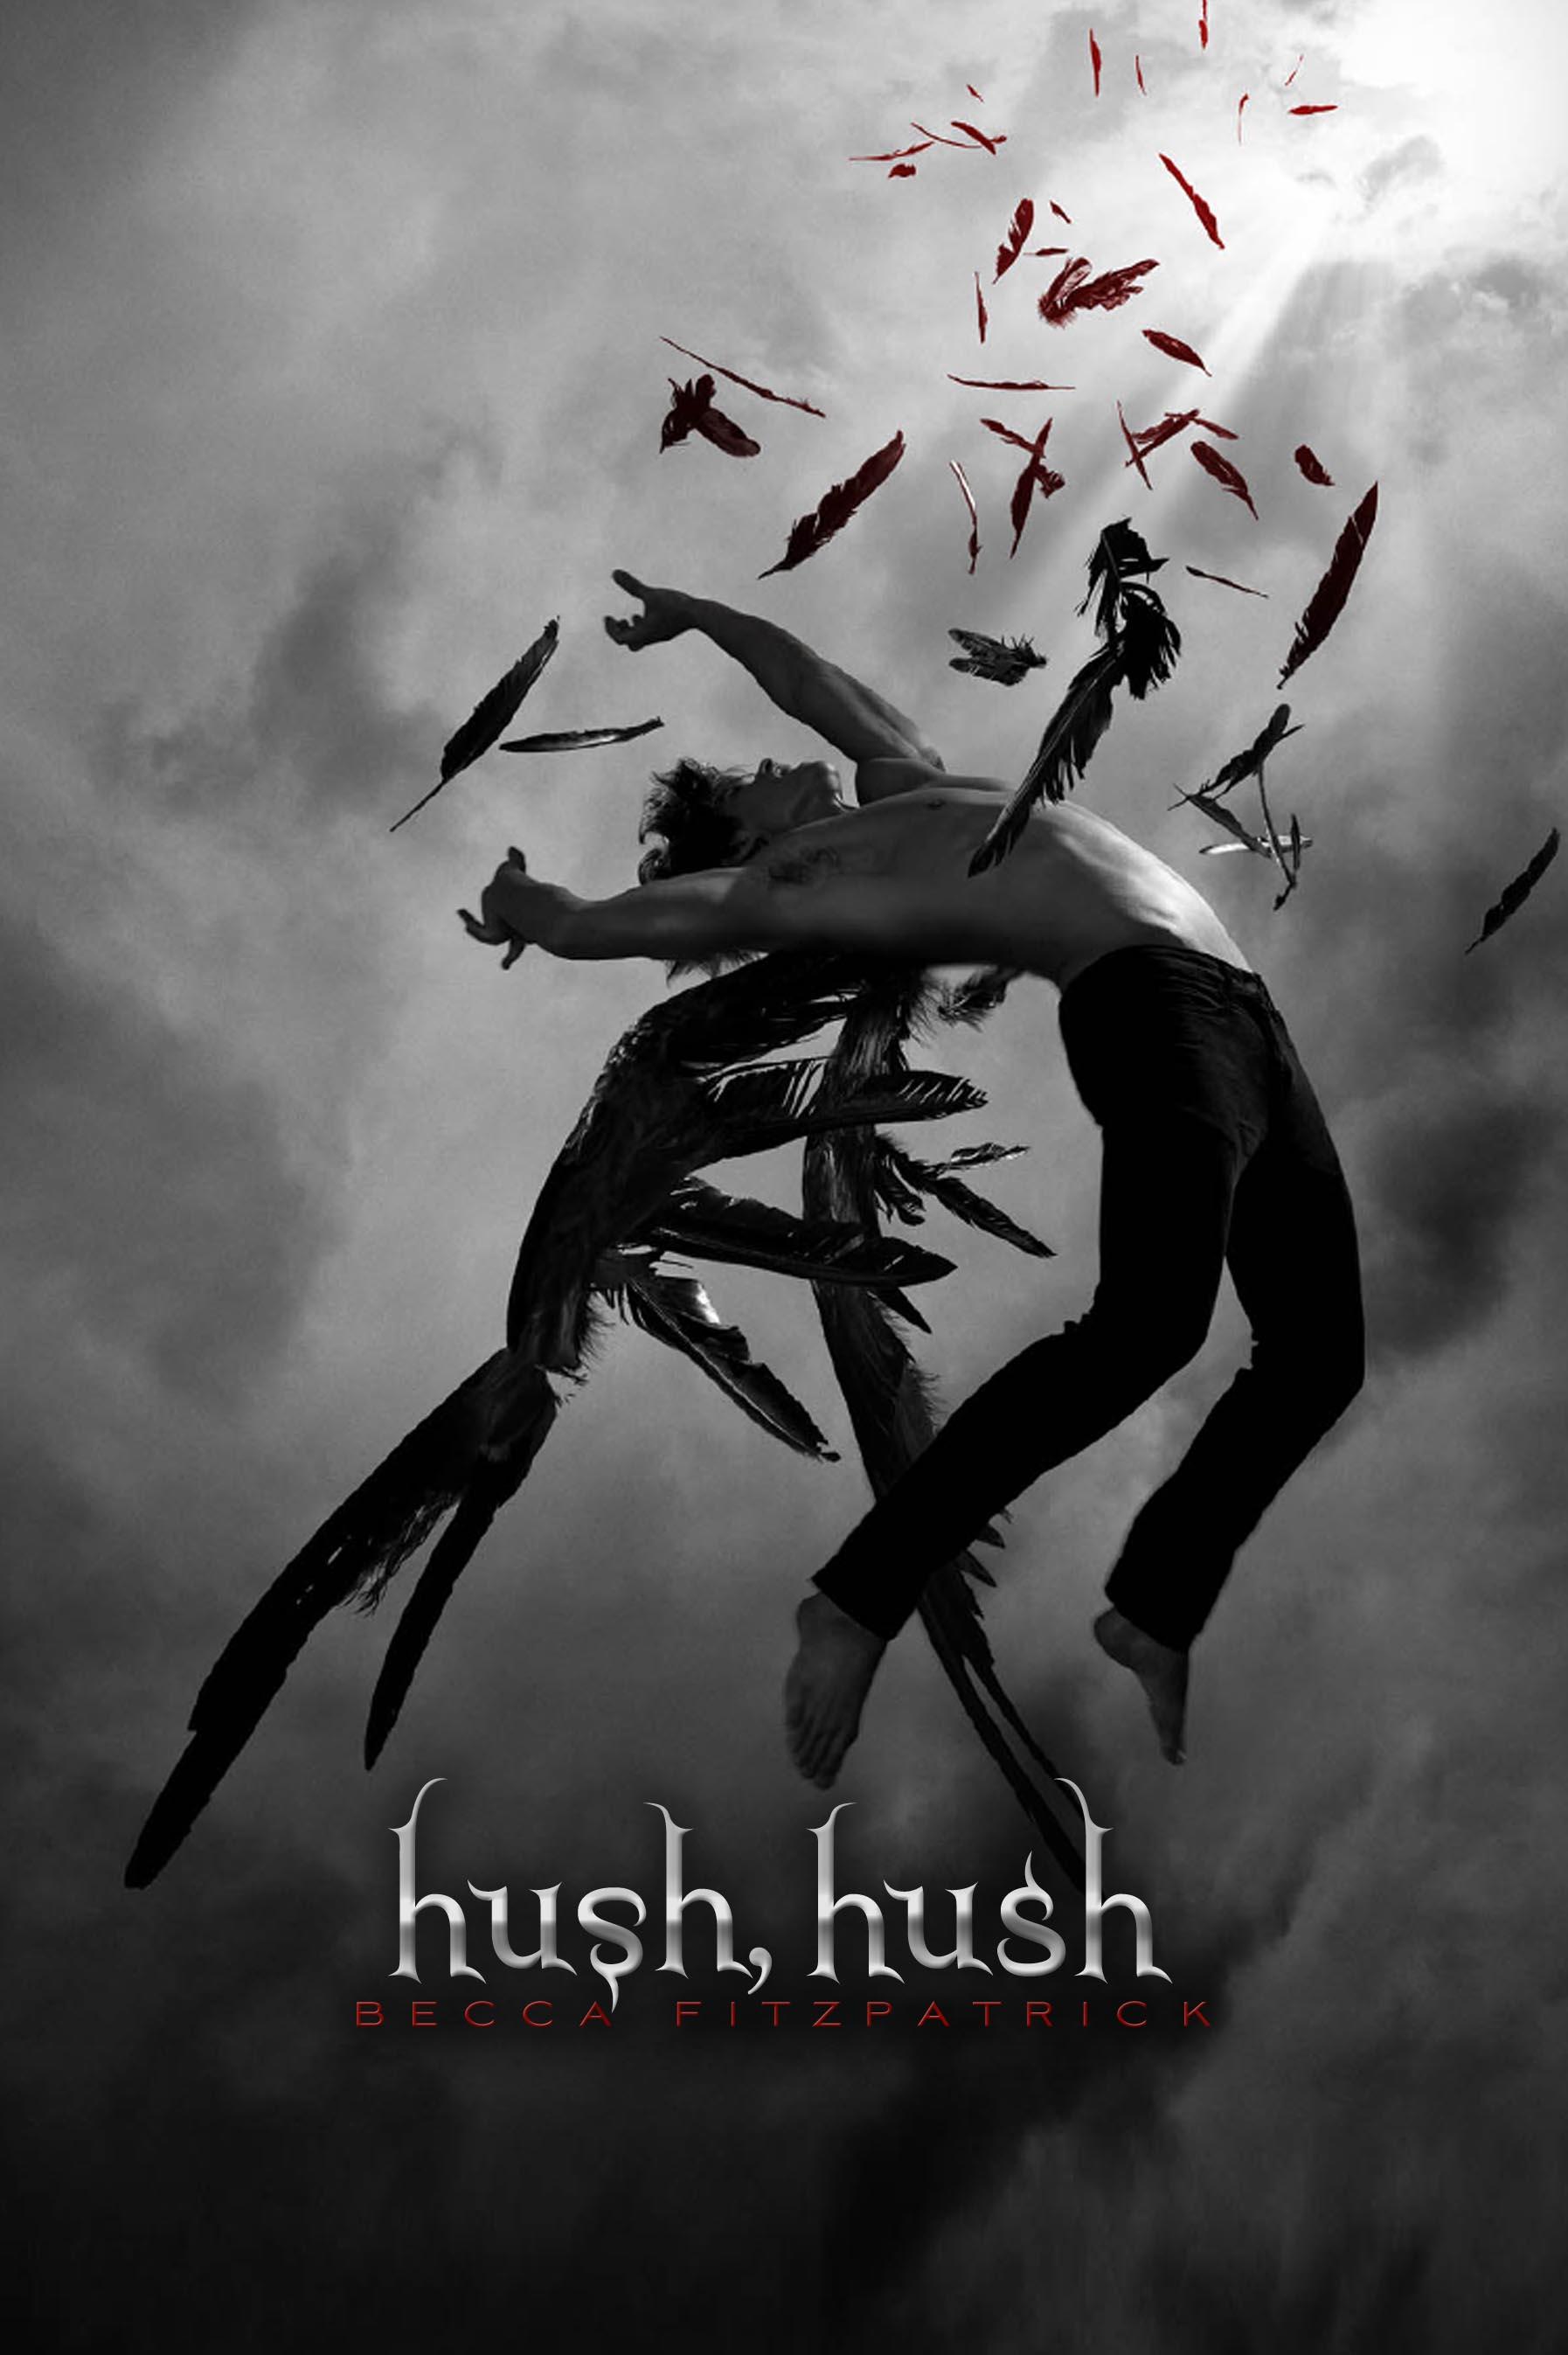 Hush Hush arrive en roman graphique (graphic novel) - Becca Fitzpatrick